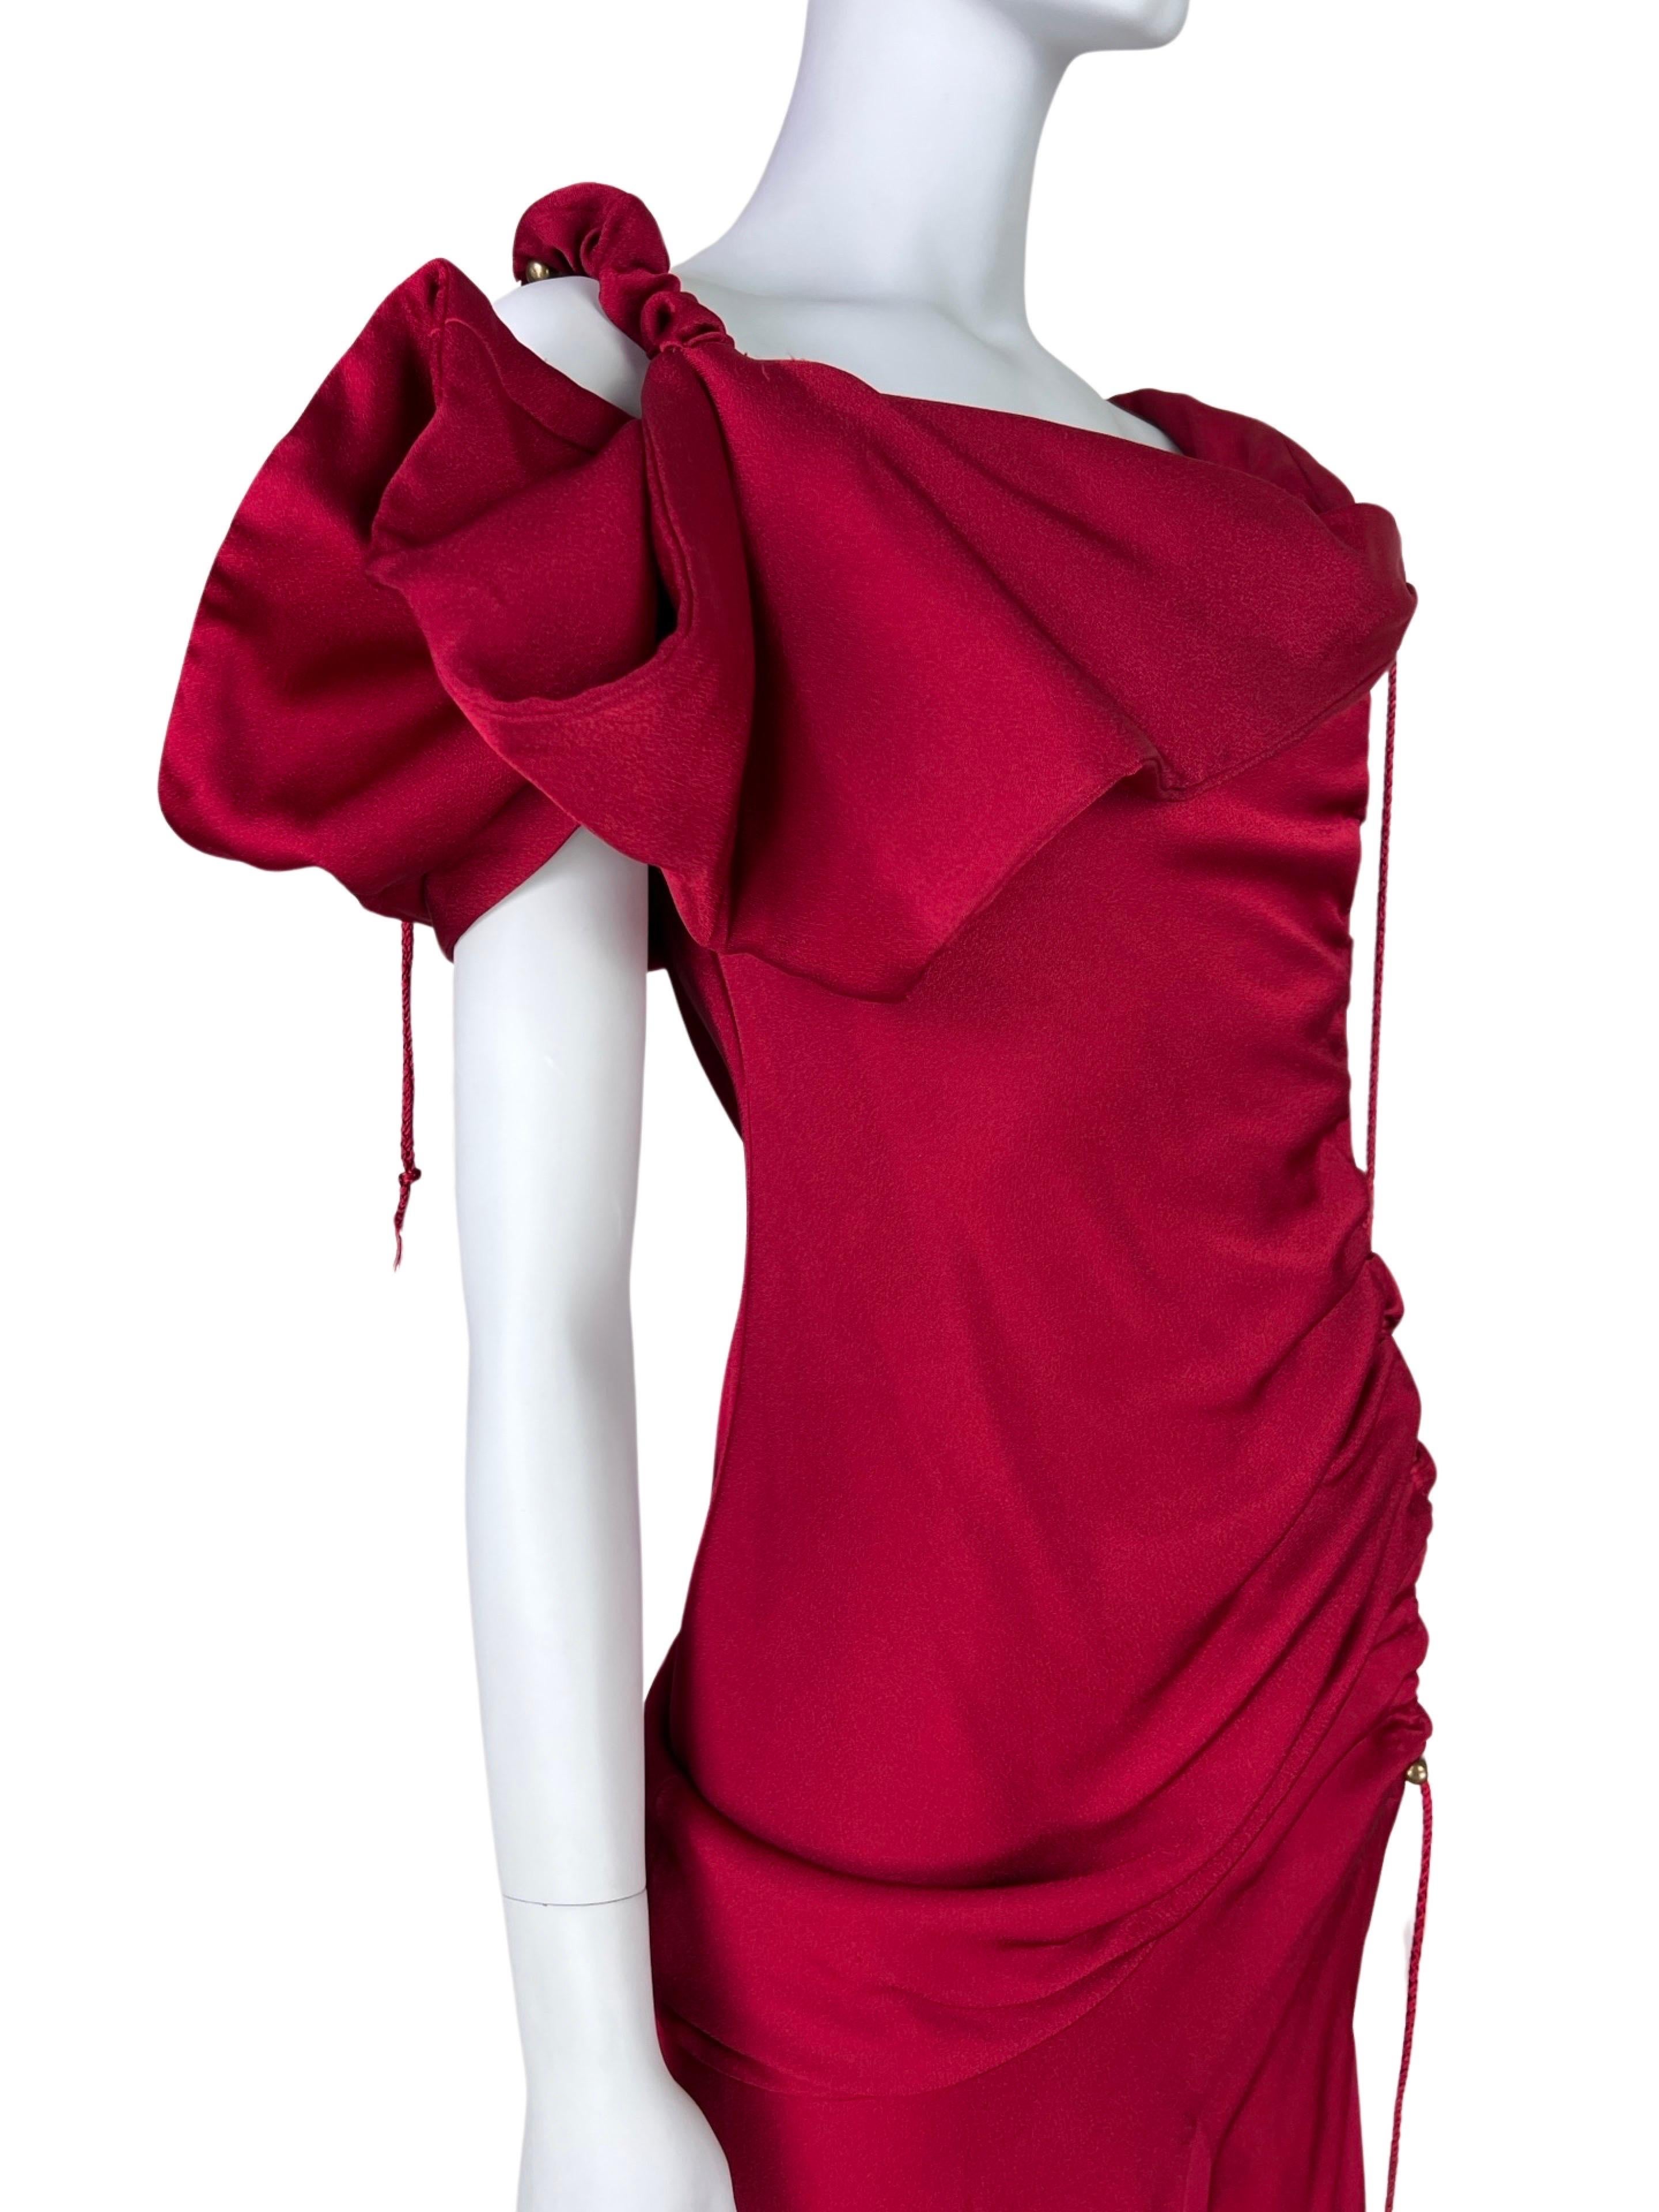 John Galliano Fall 2002 Red Draped Dress For Sale 8